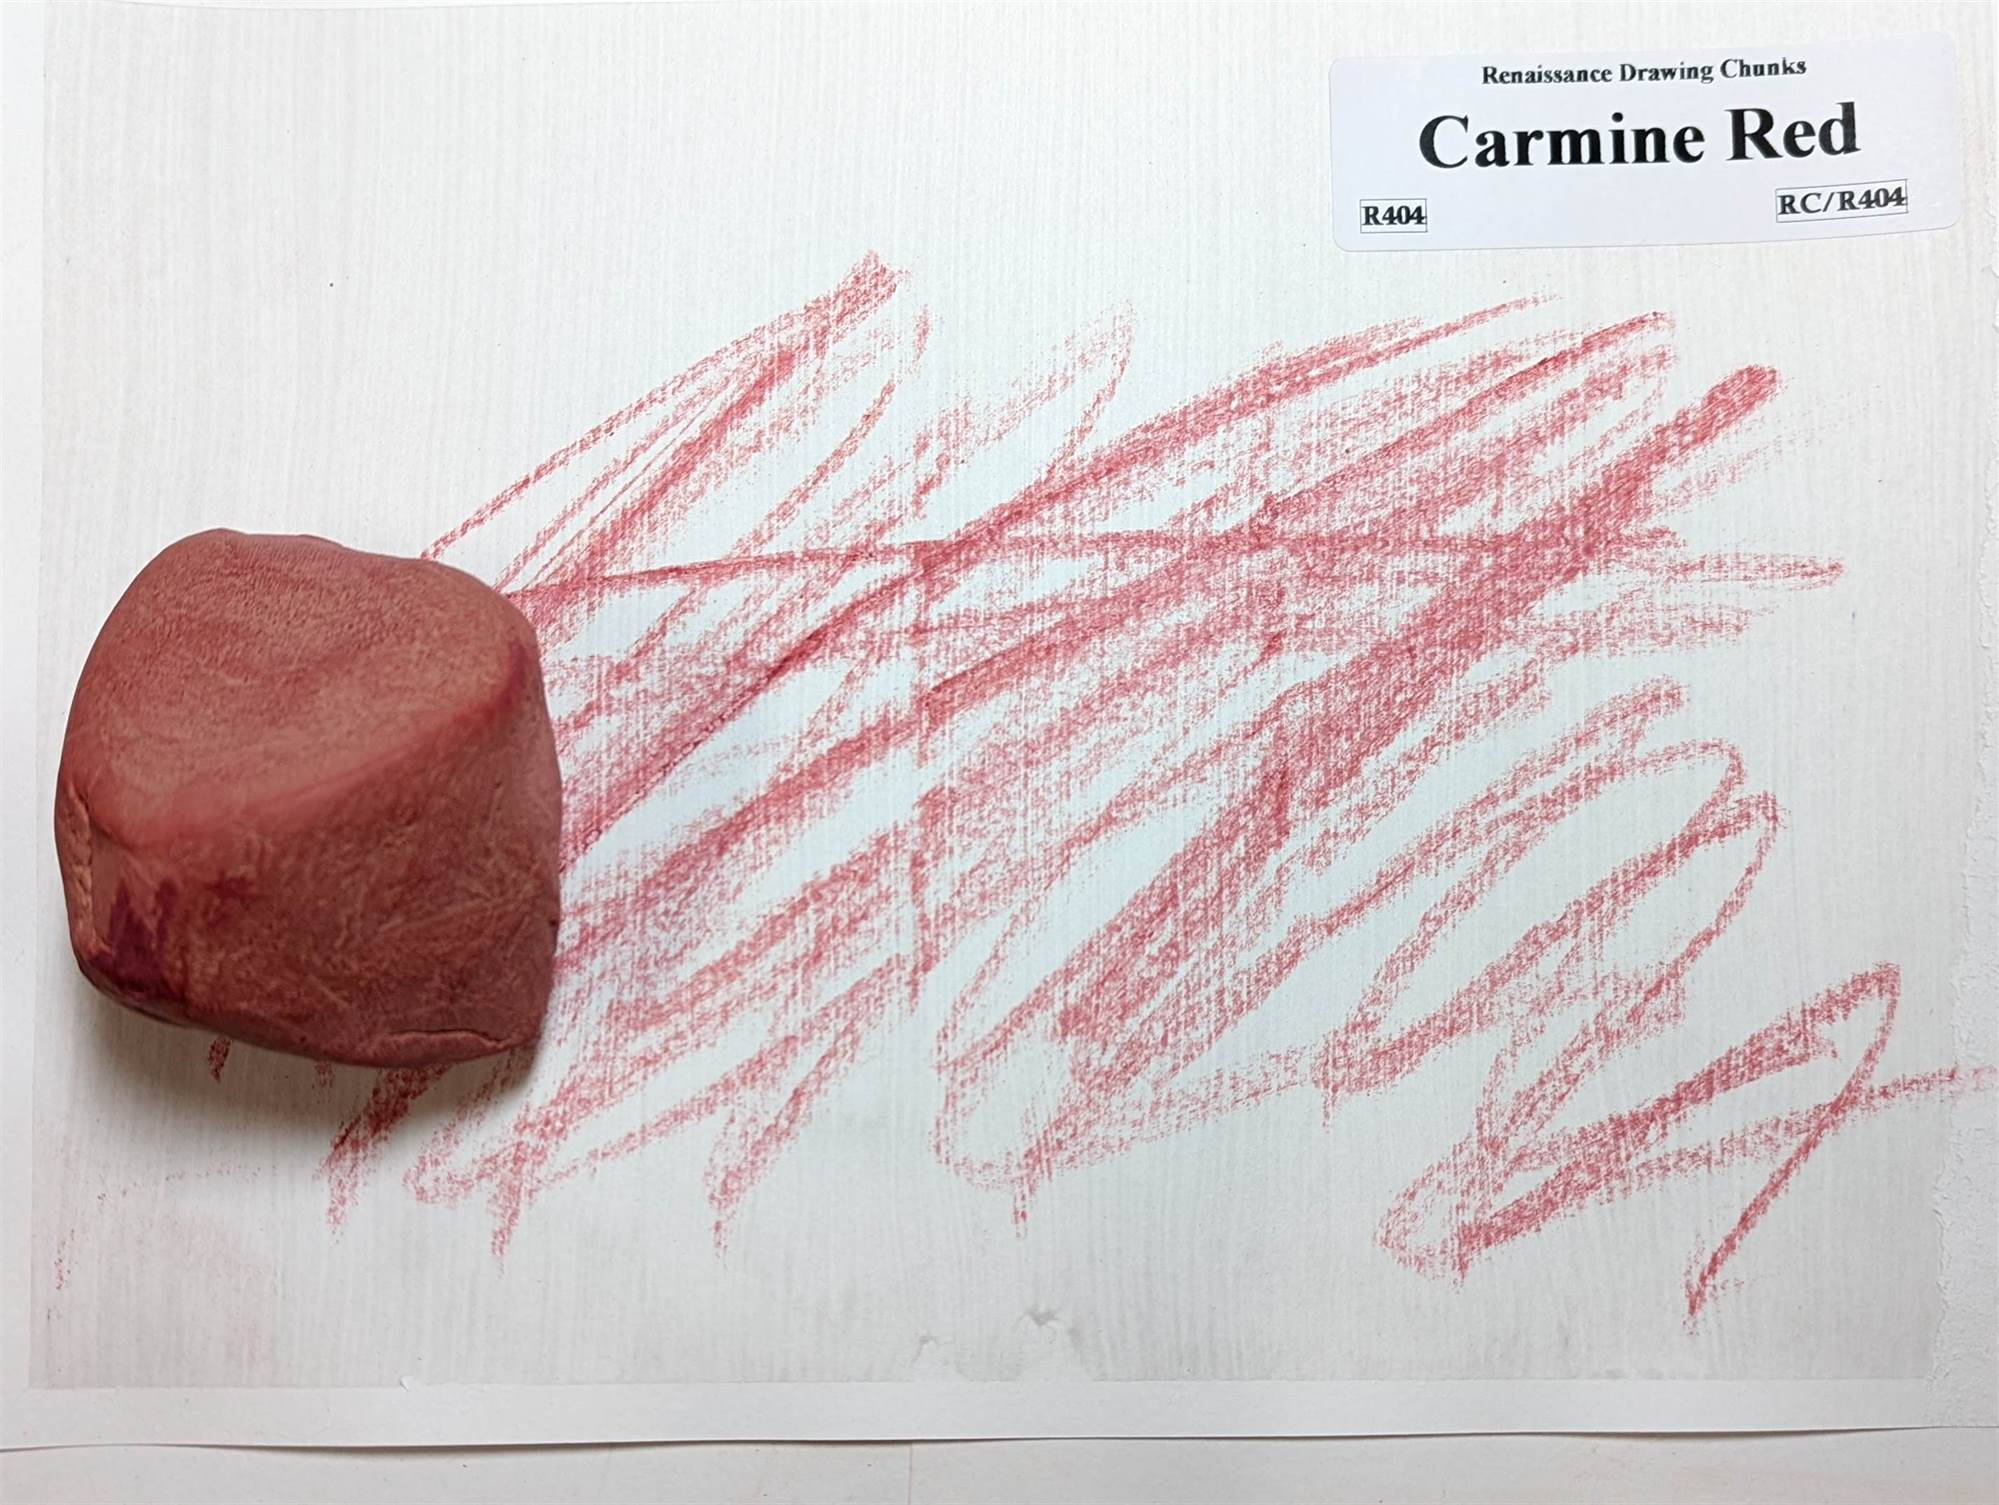 Wallace Seymour Renaissance Drawing Chunks - Carmine Red